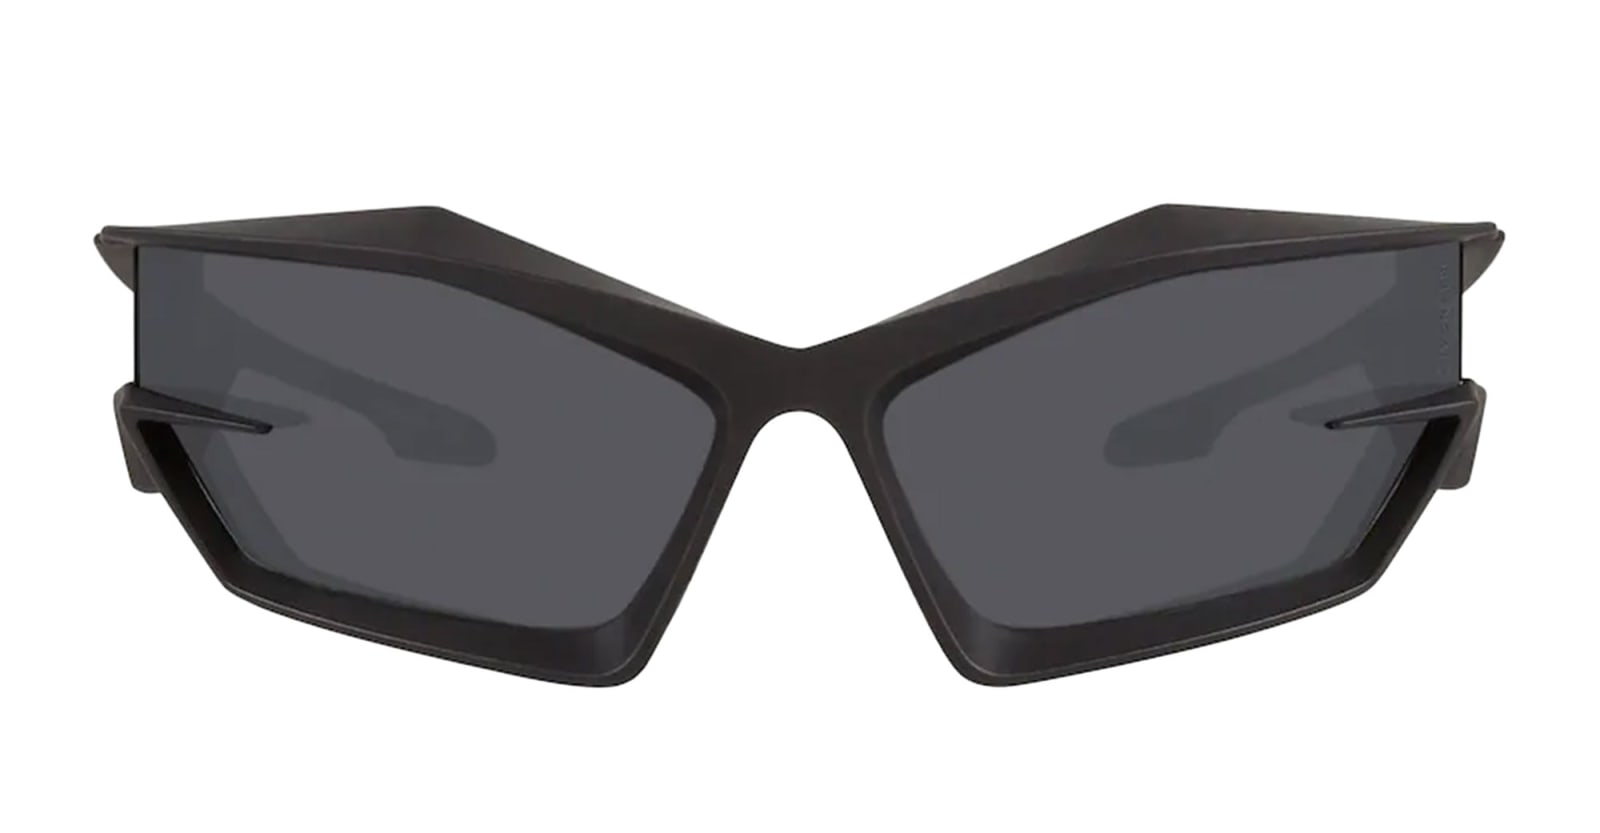 Giv Cut - Matte Black Sunglasses